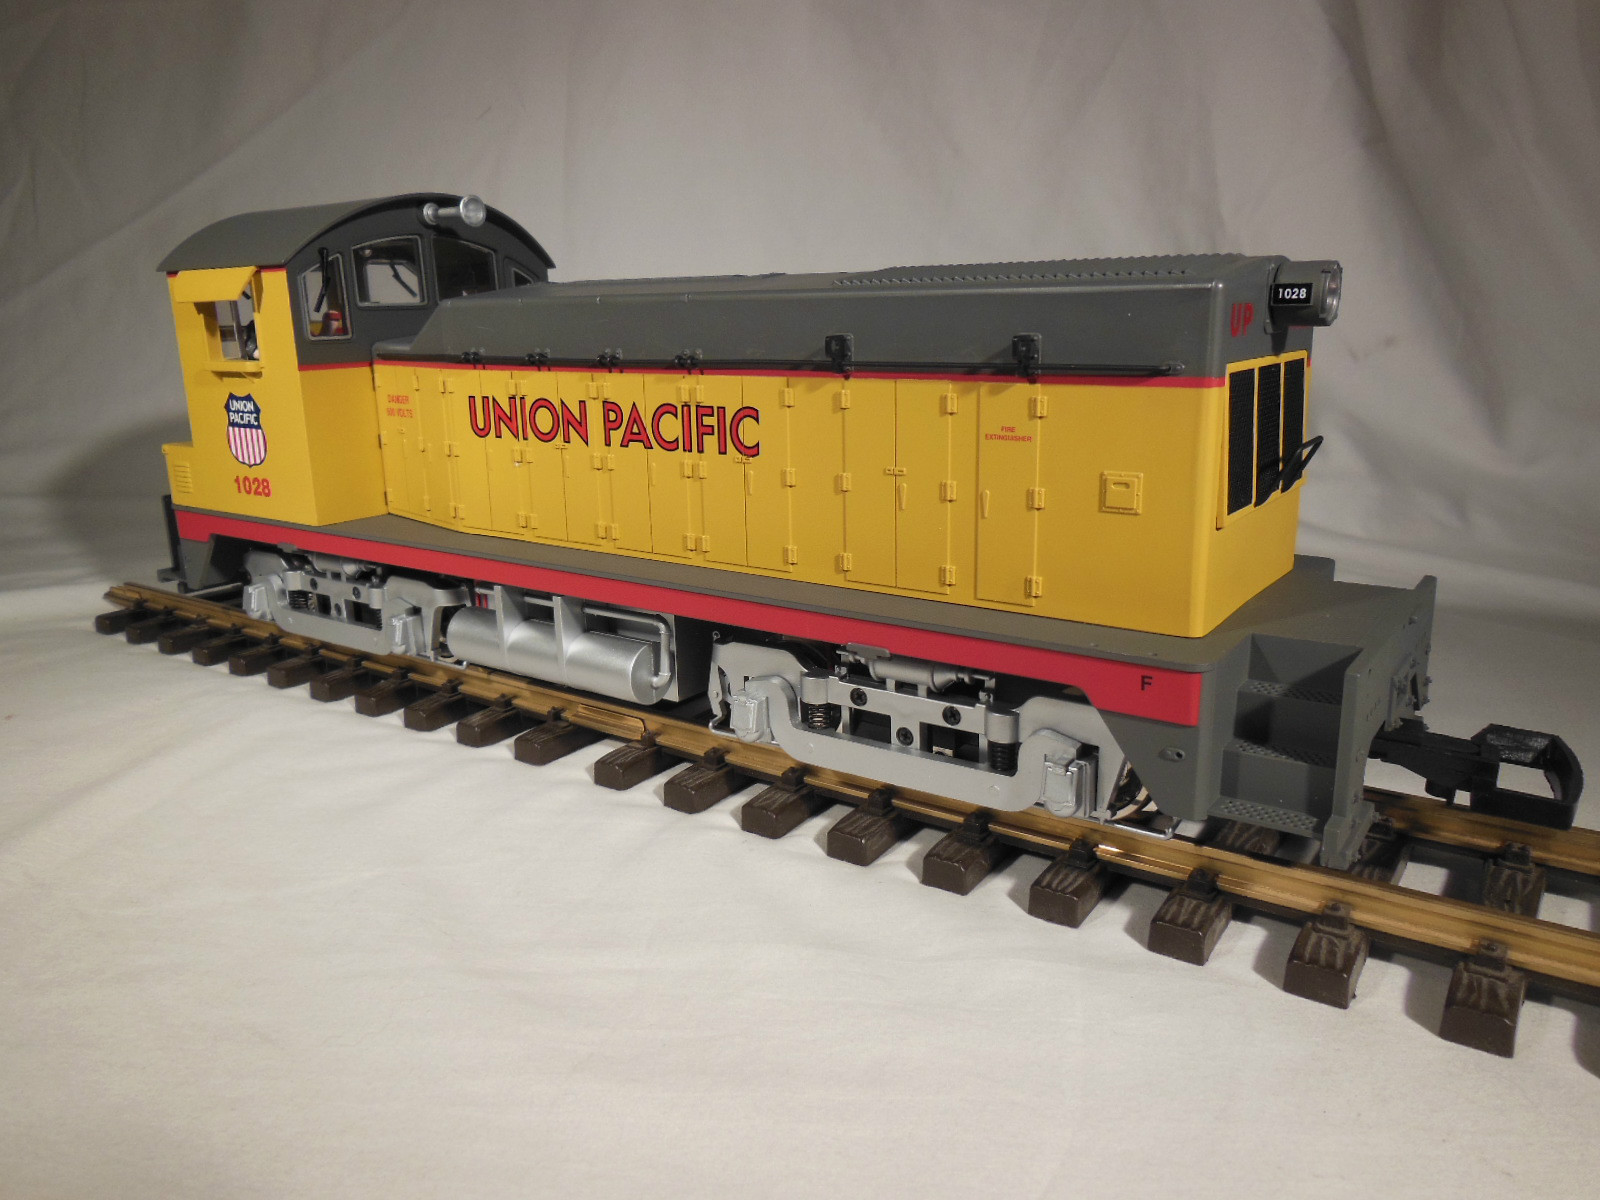 R22552 Union Pacific #1028